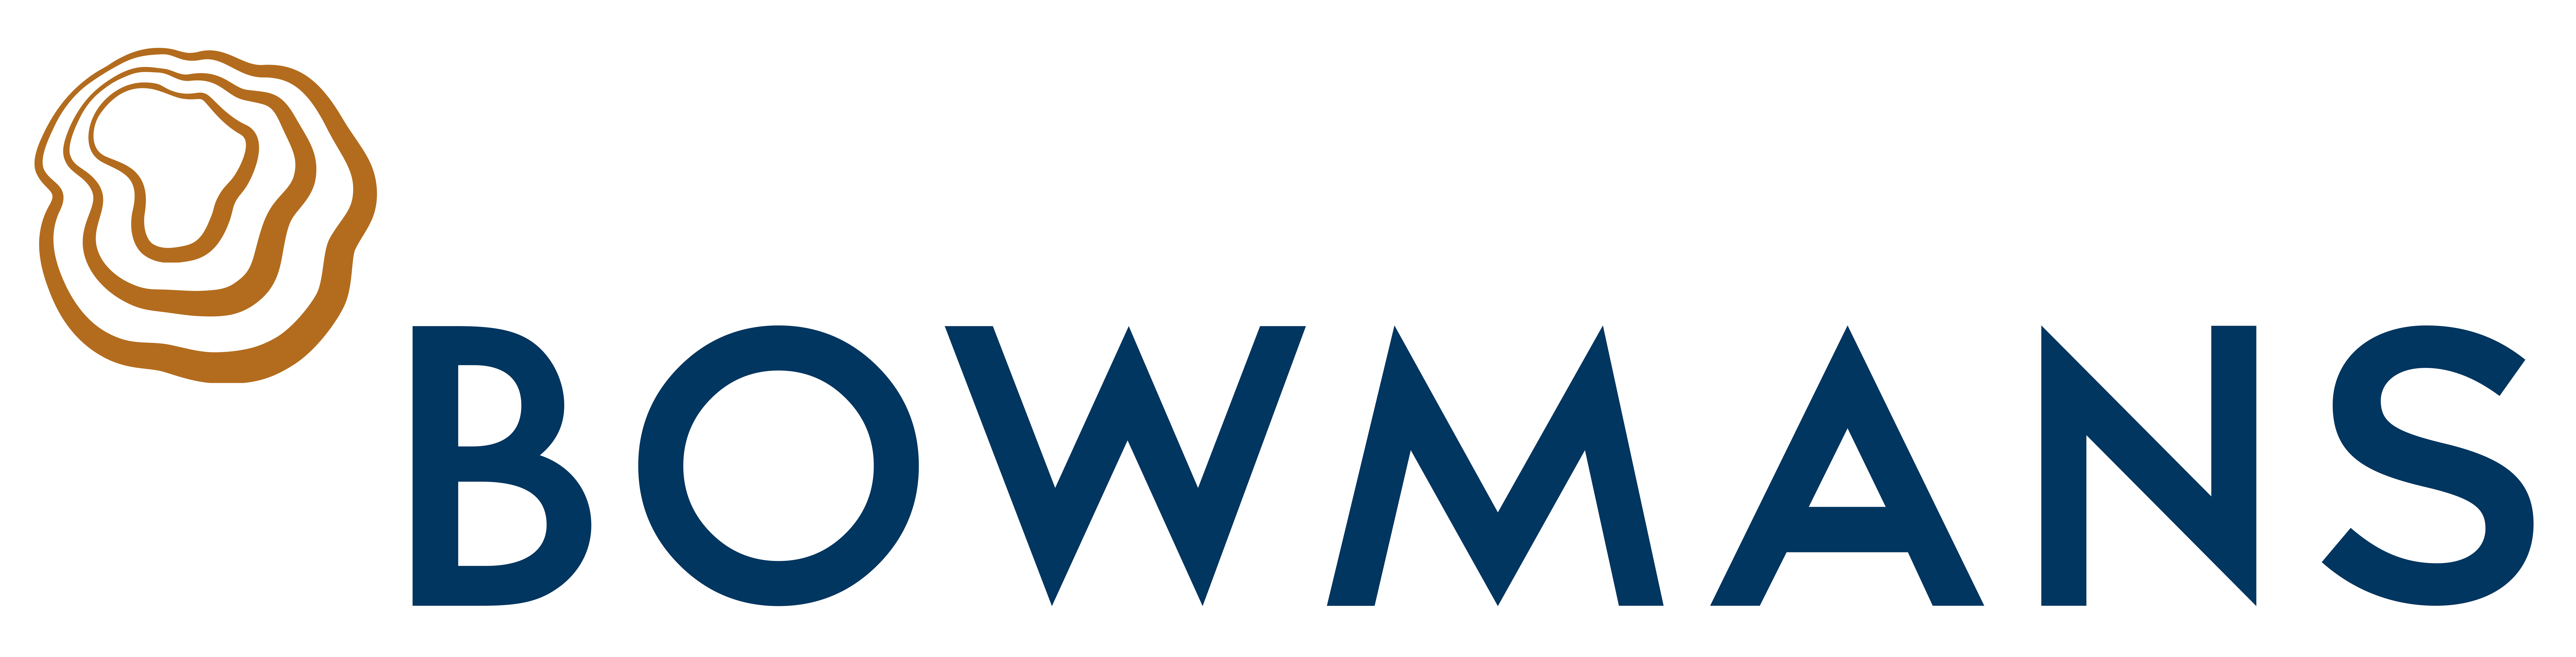 Bowmans Zambia company logo